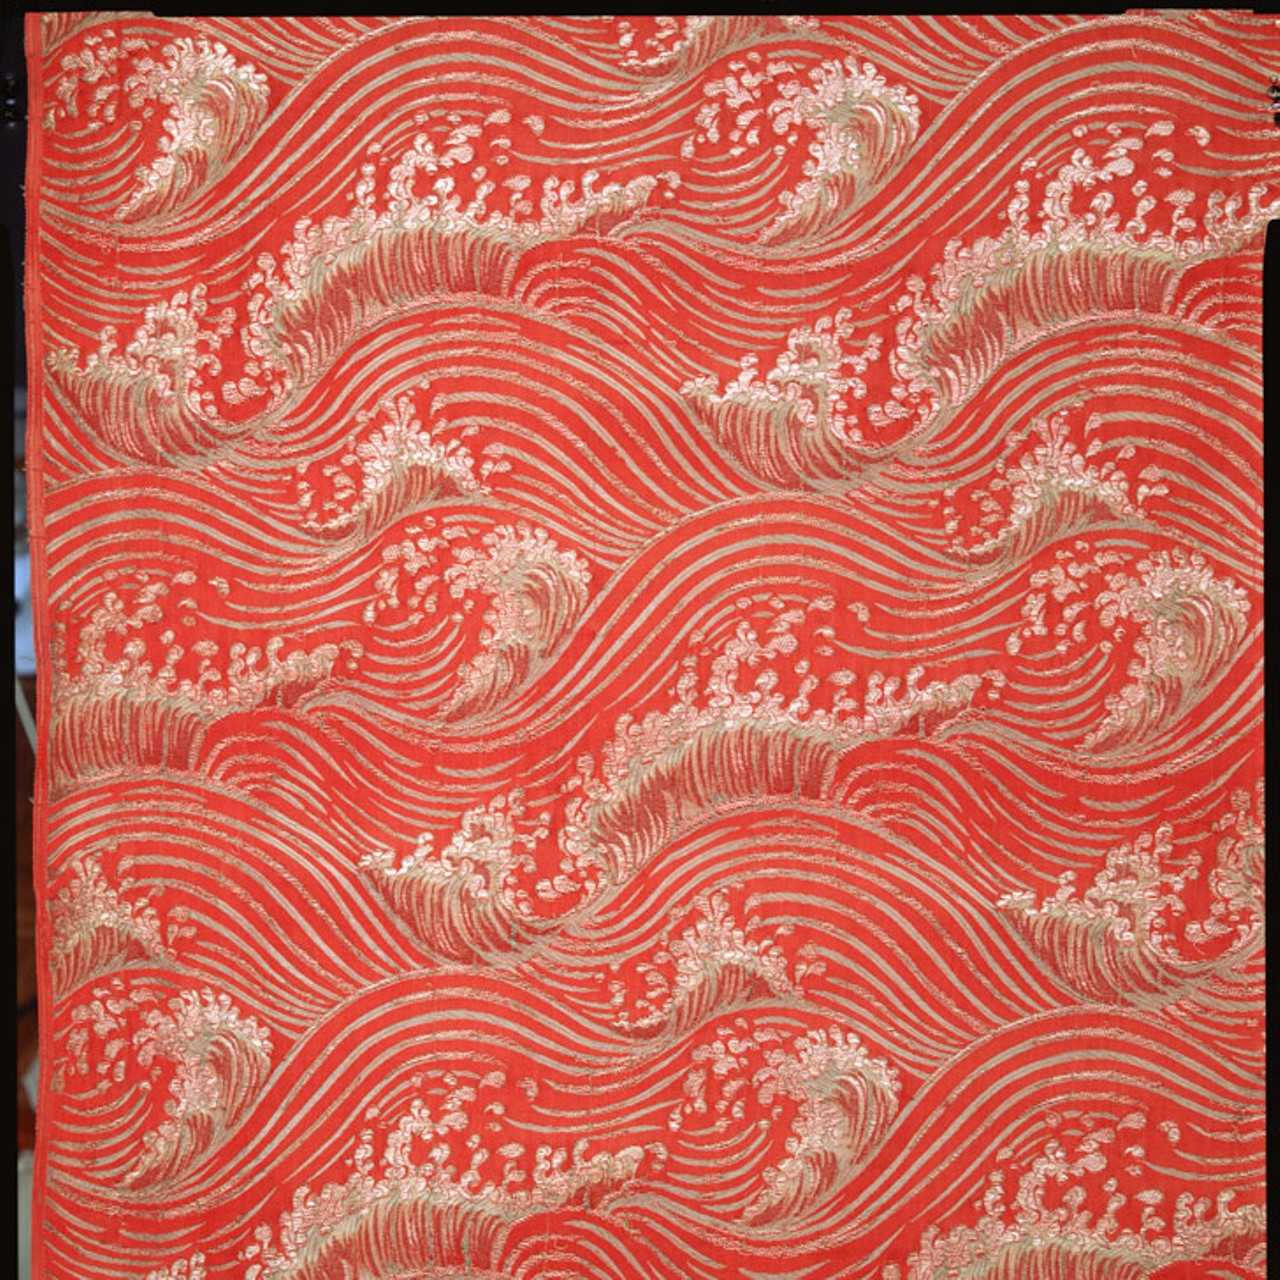 Silk textile, circa 1912
The Kyoto Costume Institute
Photo by Richard Haughton